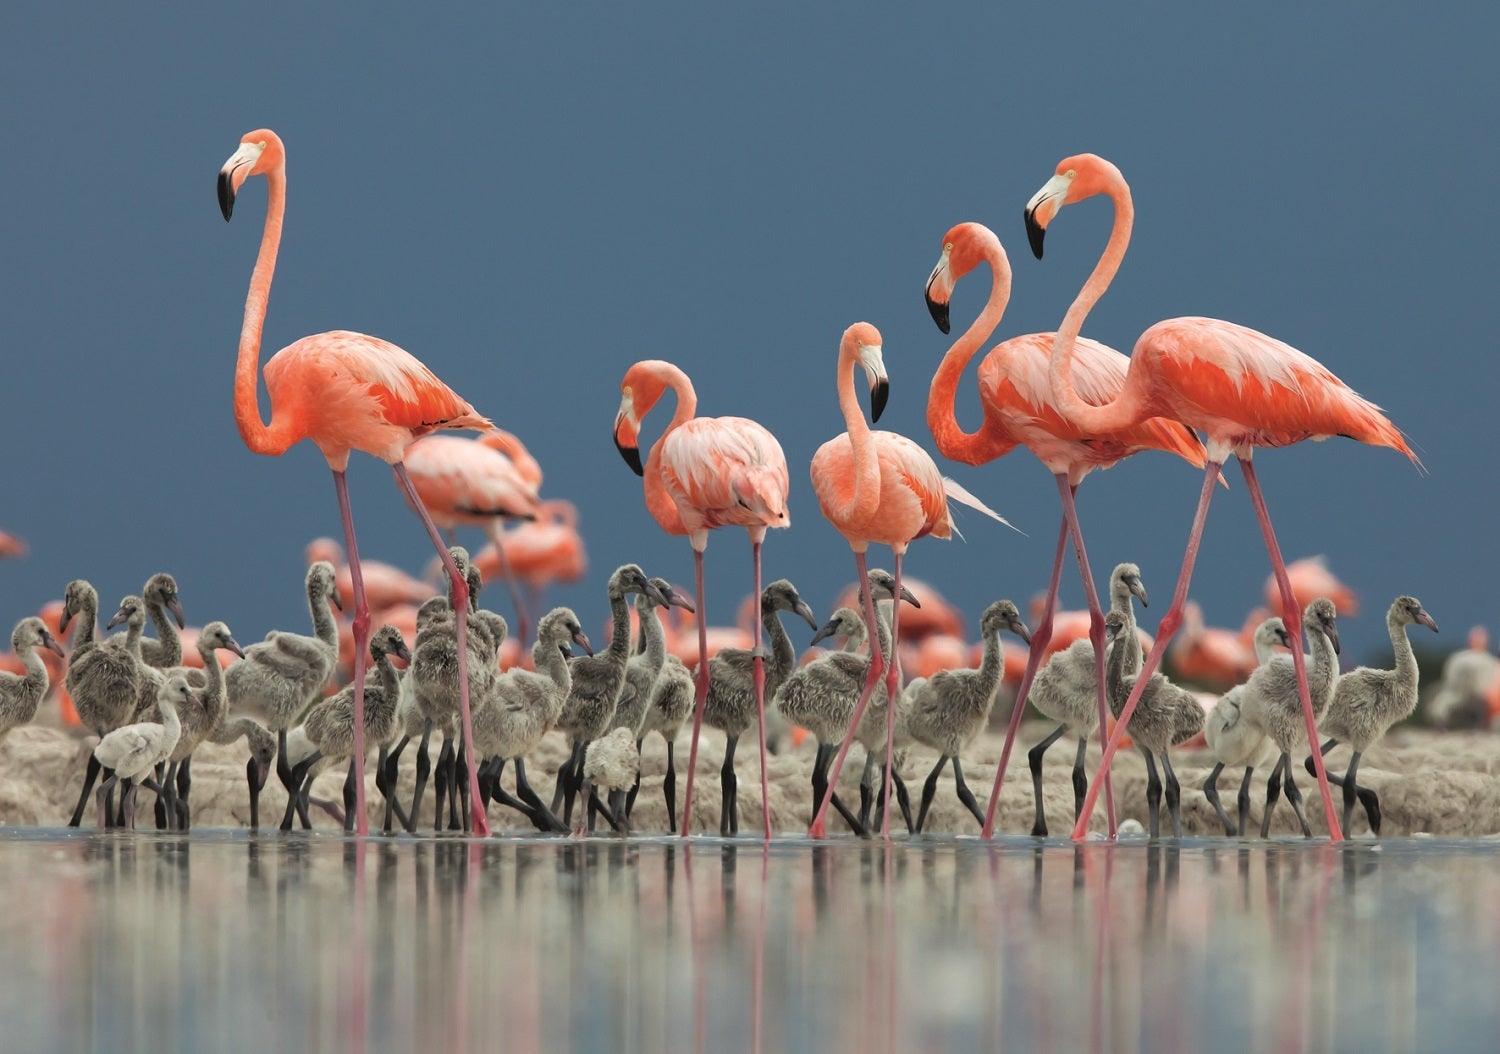 Adult Caribbean flamingos standing over gray fuzzy adolescent birds